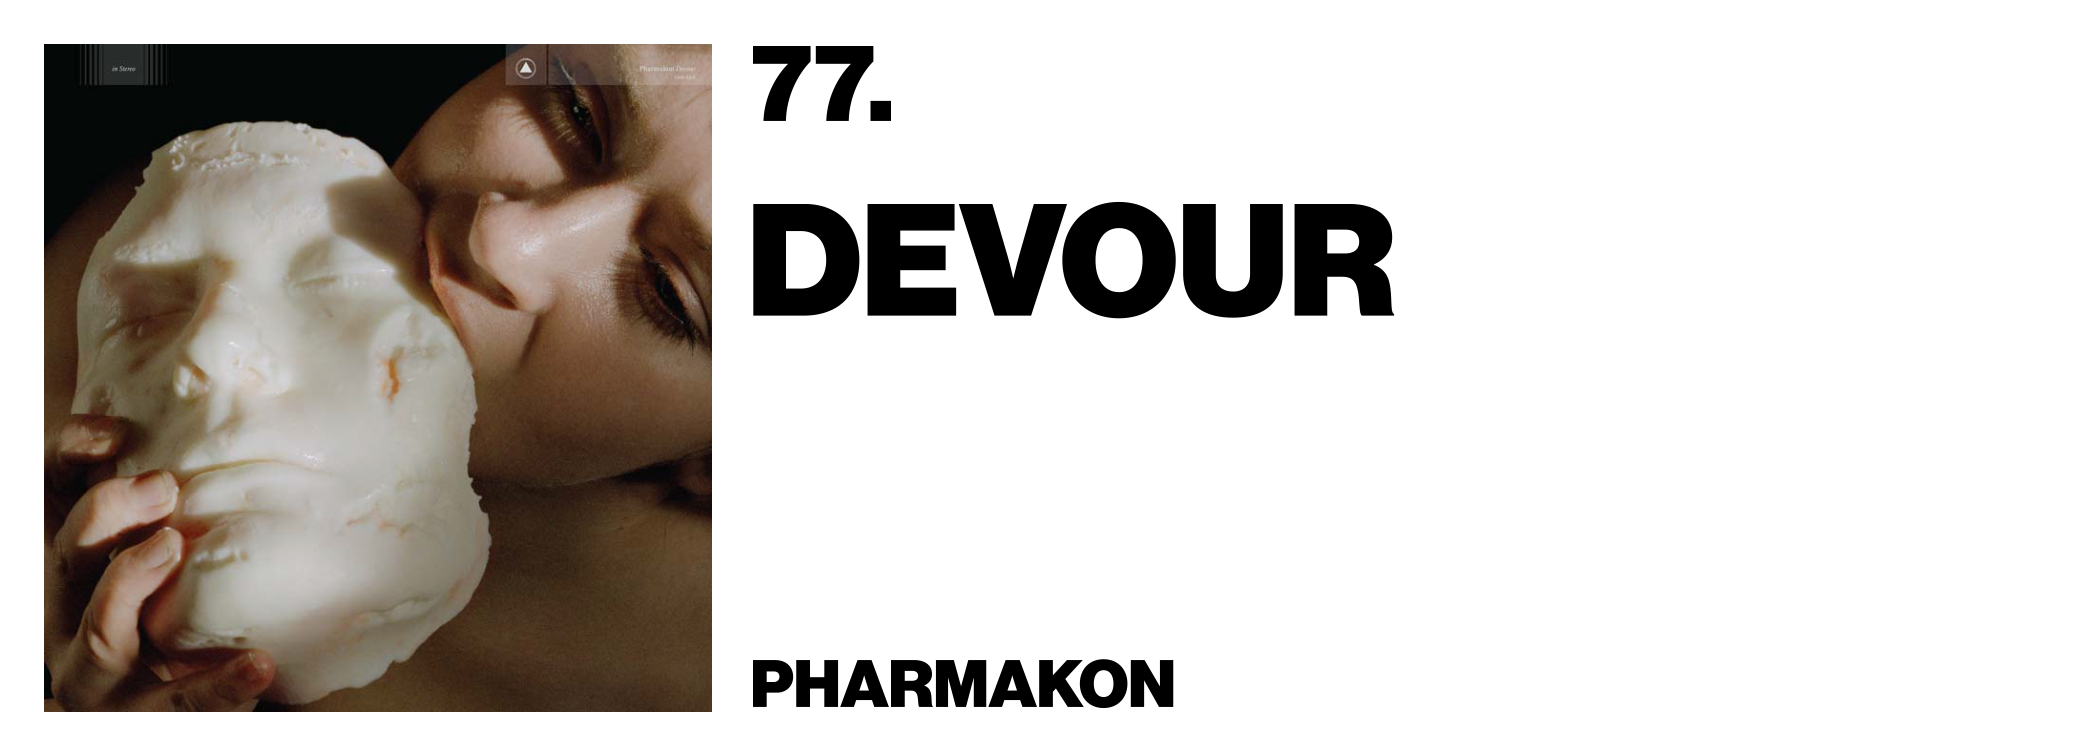 1575925193259-77-Pharmakon-Devour